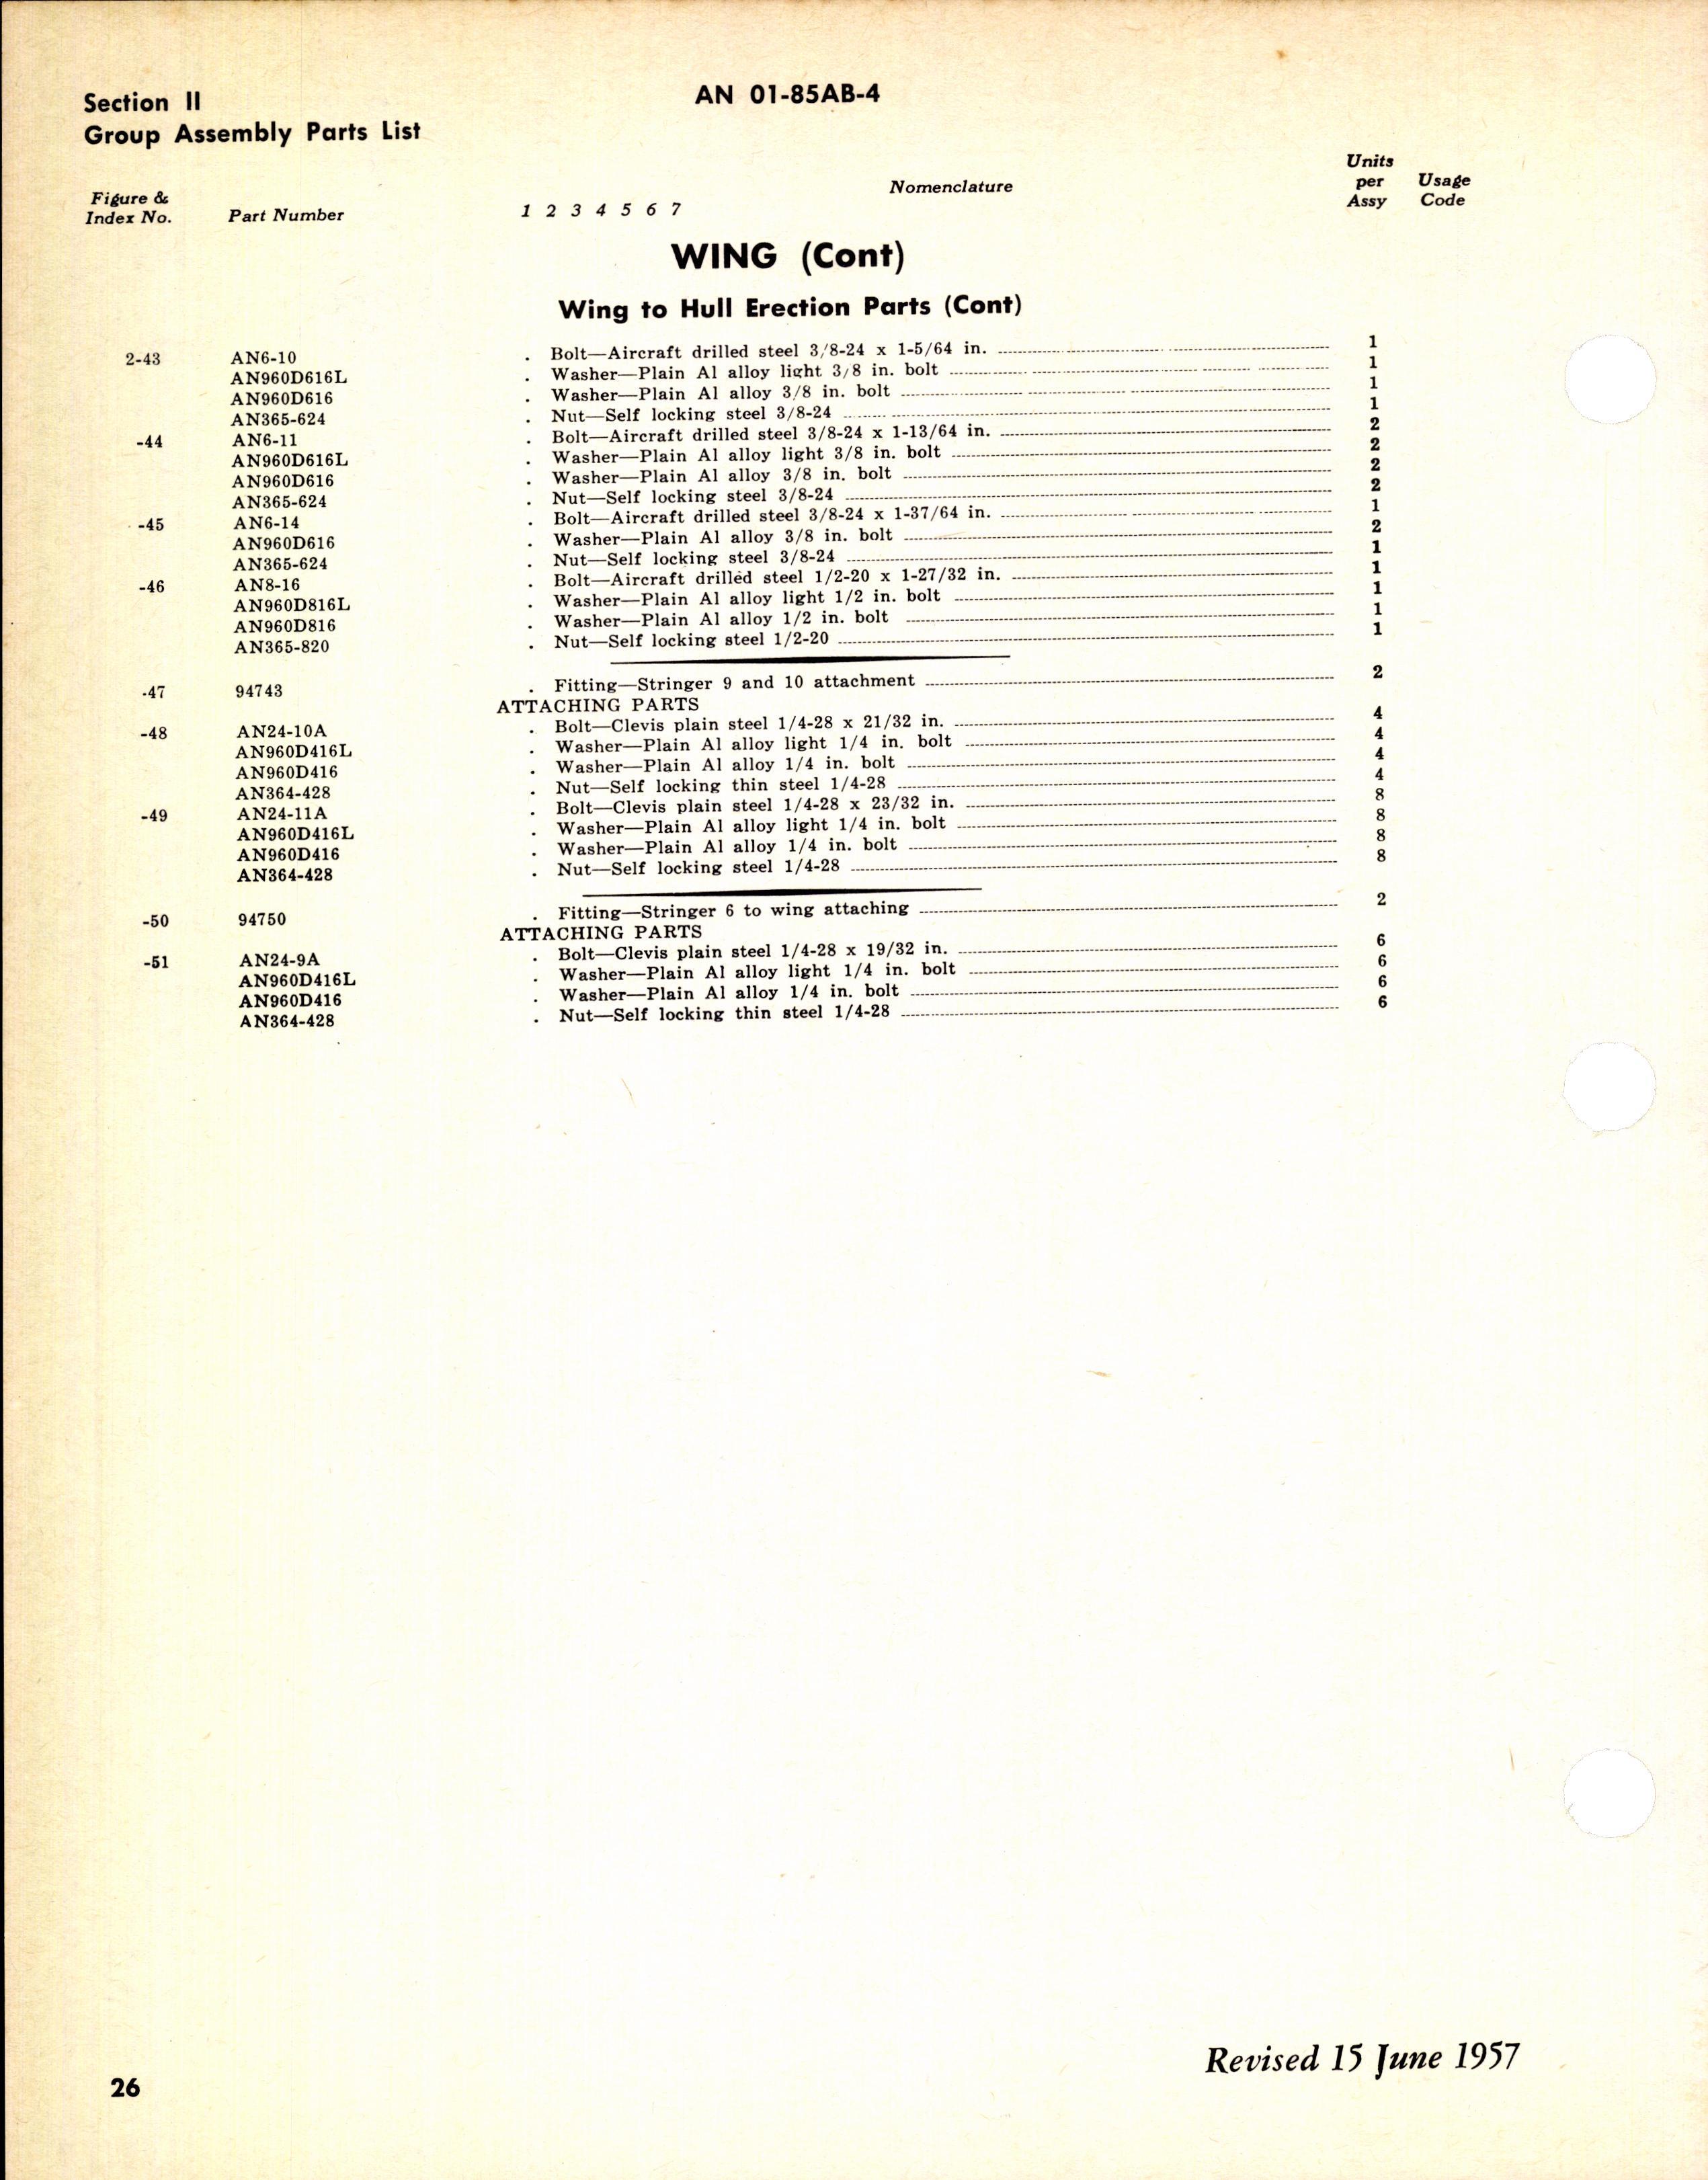 Sample page 74 from AirCorps Library document: Parts Catalog for SA-16A, SA-16B, and UF-1 Aircraft